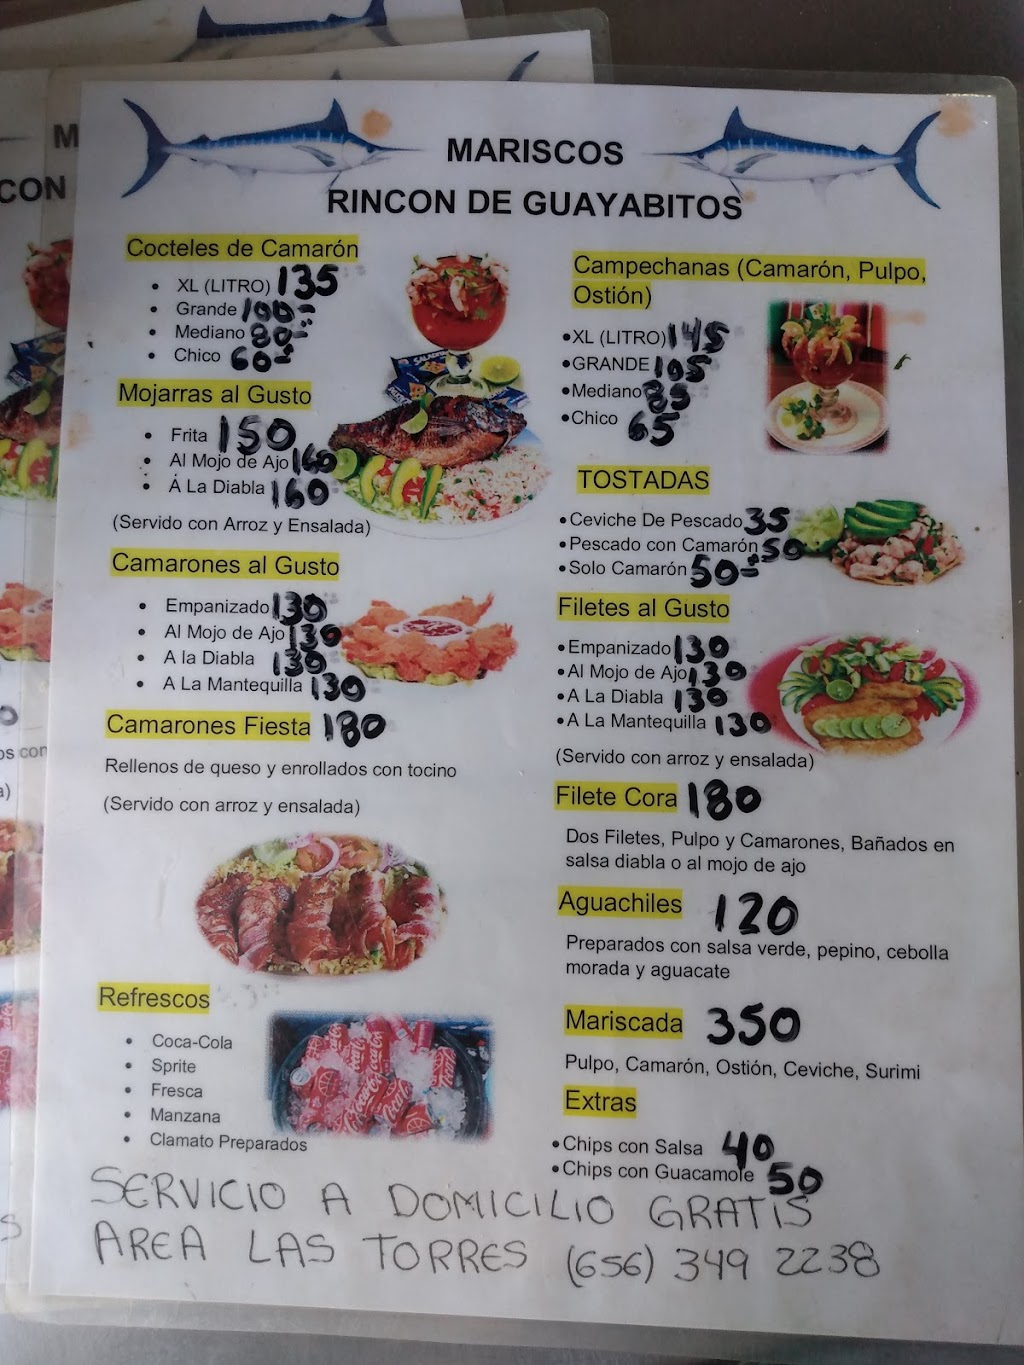 Mariscos Rincon De Guayabitos | C. Lucero, Cd Juárez, Chih., Mexico | Phone: 656 349 2238